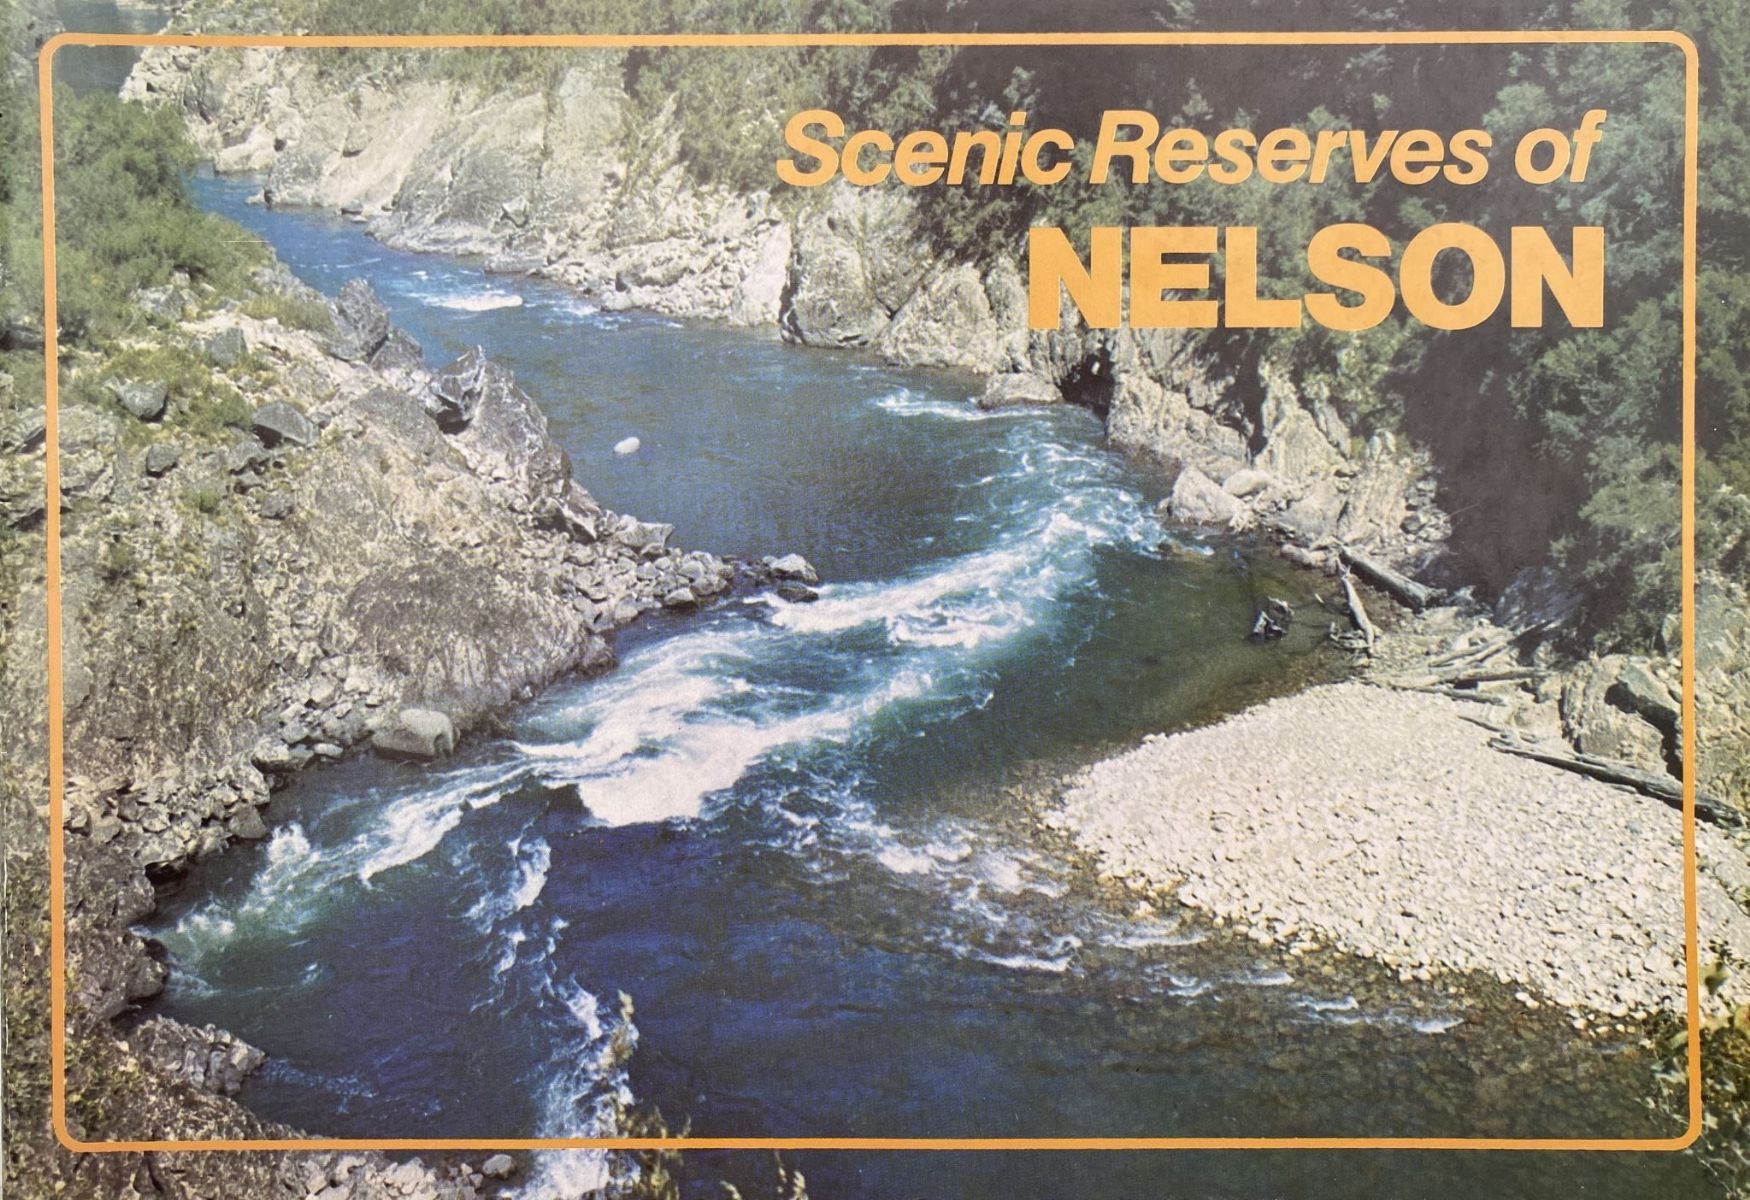 SCENIC RESERVES OF NELSON